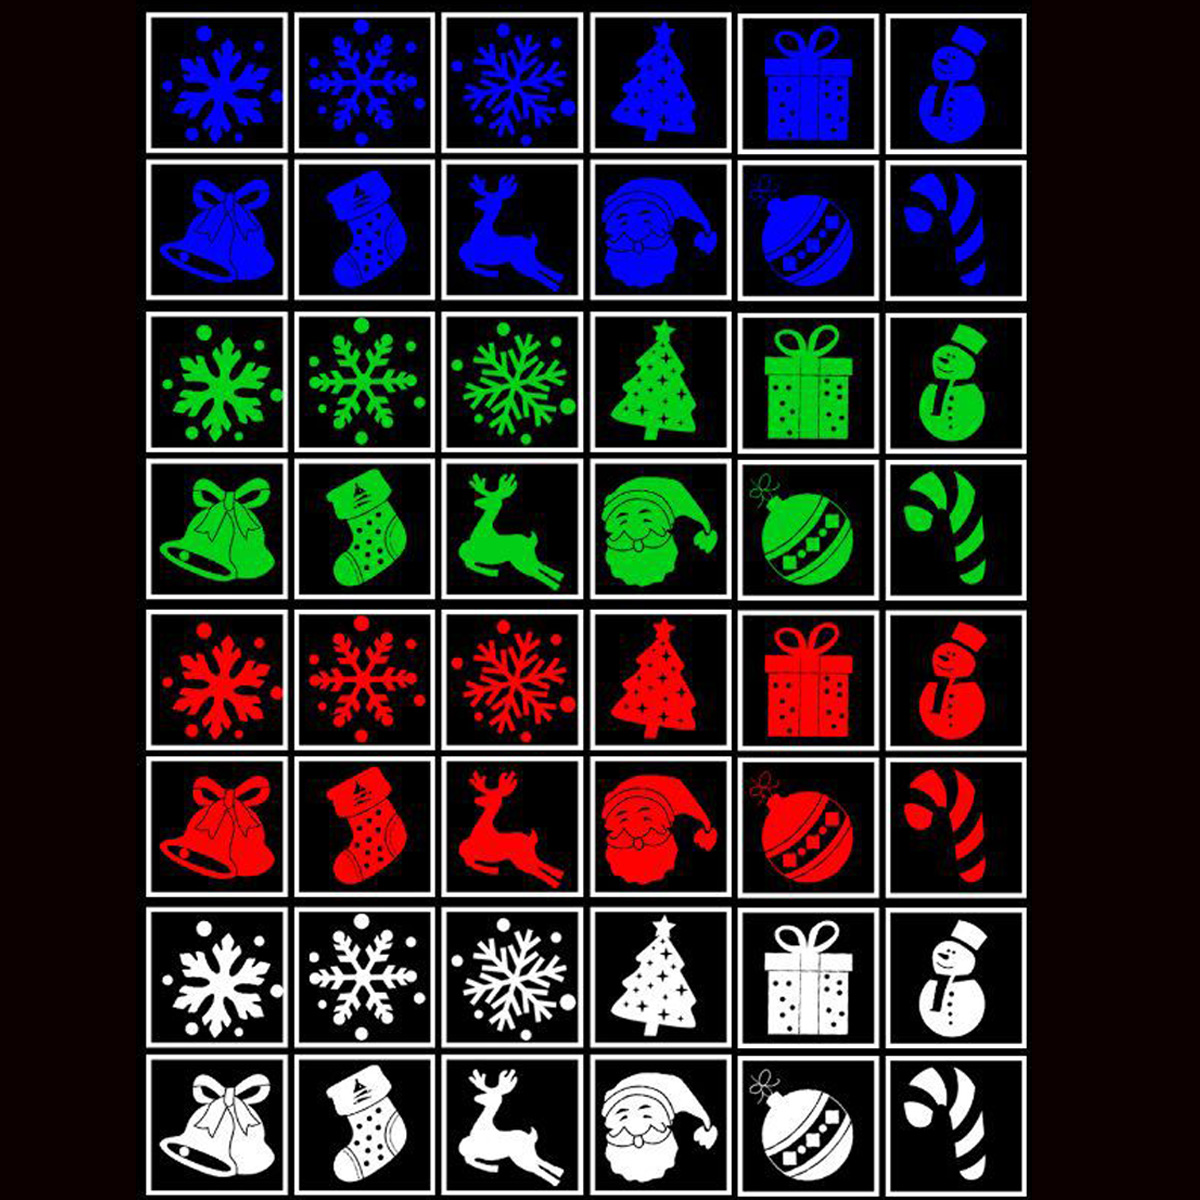 Christmas-12-Patterns-Flashlight-Projector-Lights-Garden-Decorative-Lamp-Light-Waterproof-Sparkling--1792180-3